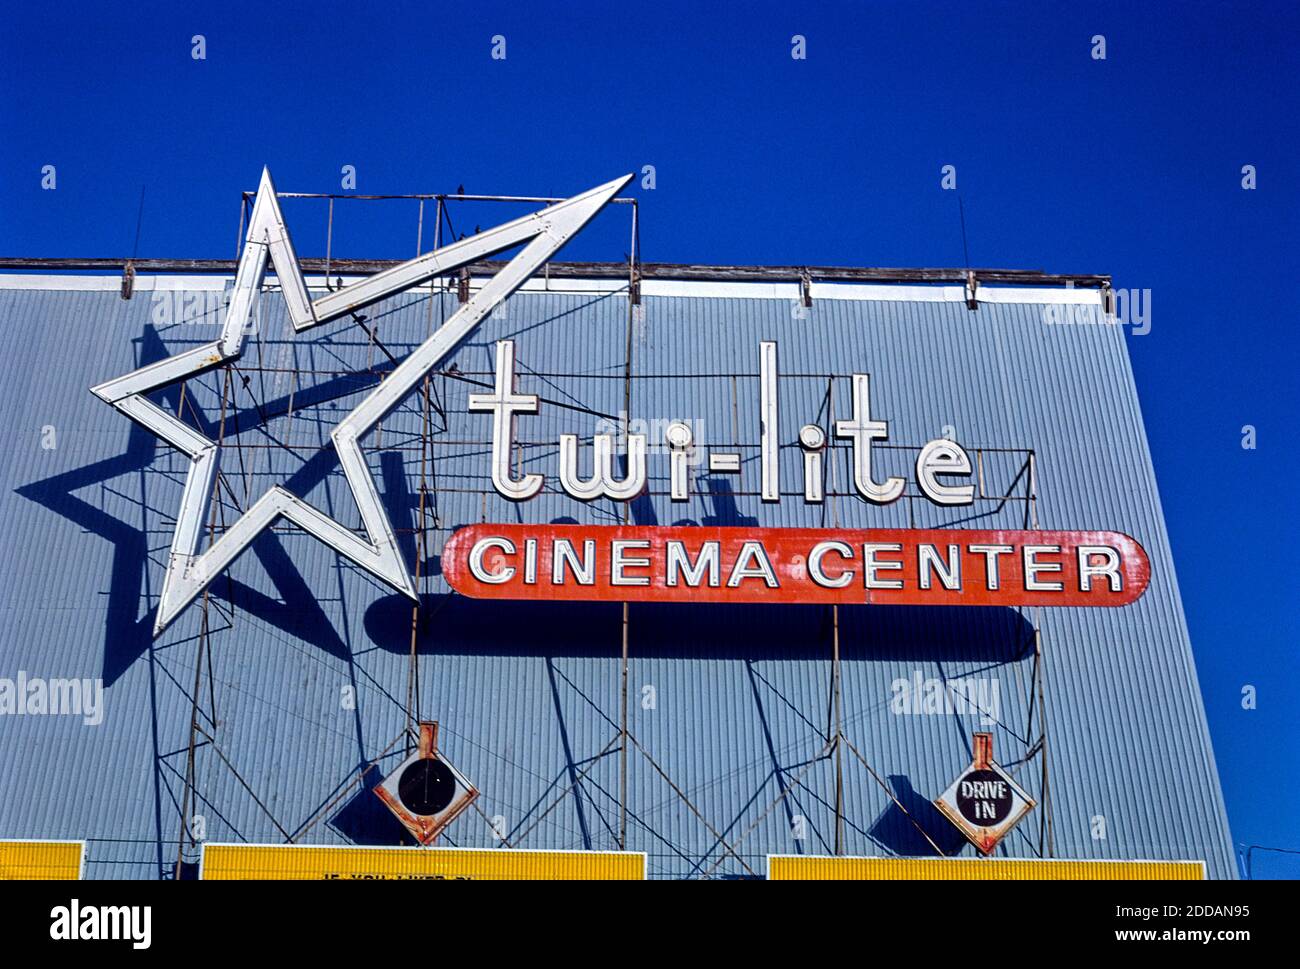 Twin-Lite Cinema Center, Great Falls, Montana, États-Unis, John Margolies Roadside America Photograph Archive, 1987 Banque D'Images